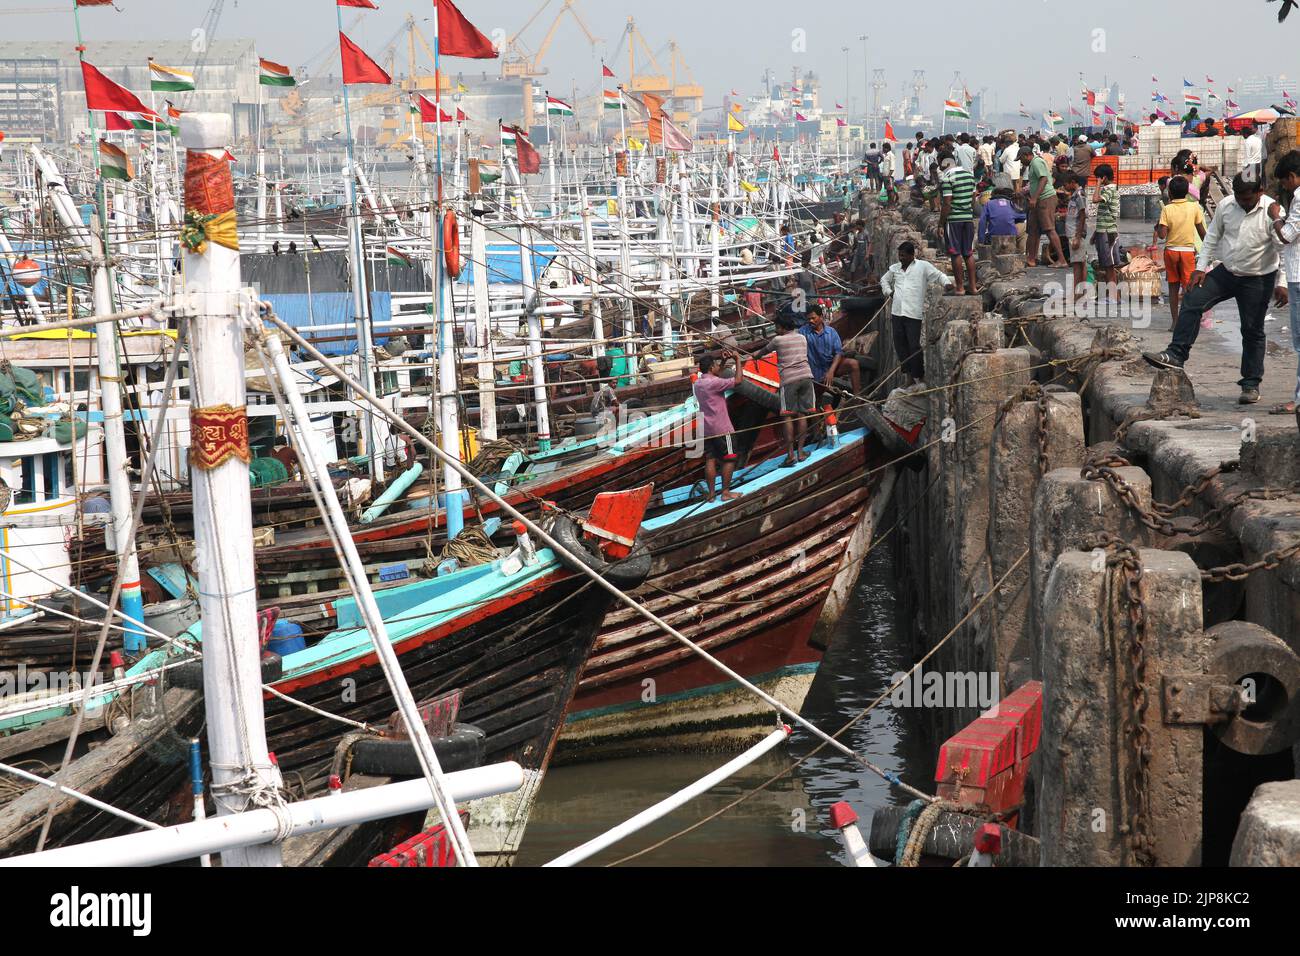 Barche da pesca, Ferry Wharf, Bhaucha Dhakka, Mazgaon, Mumbai, India il 2 febbraio 2013 Foto Stock